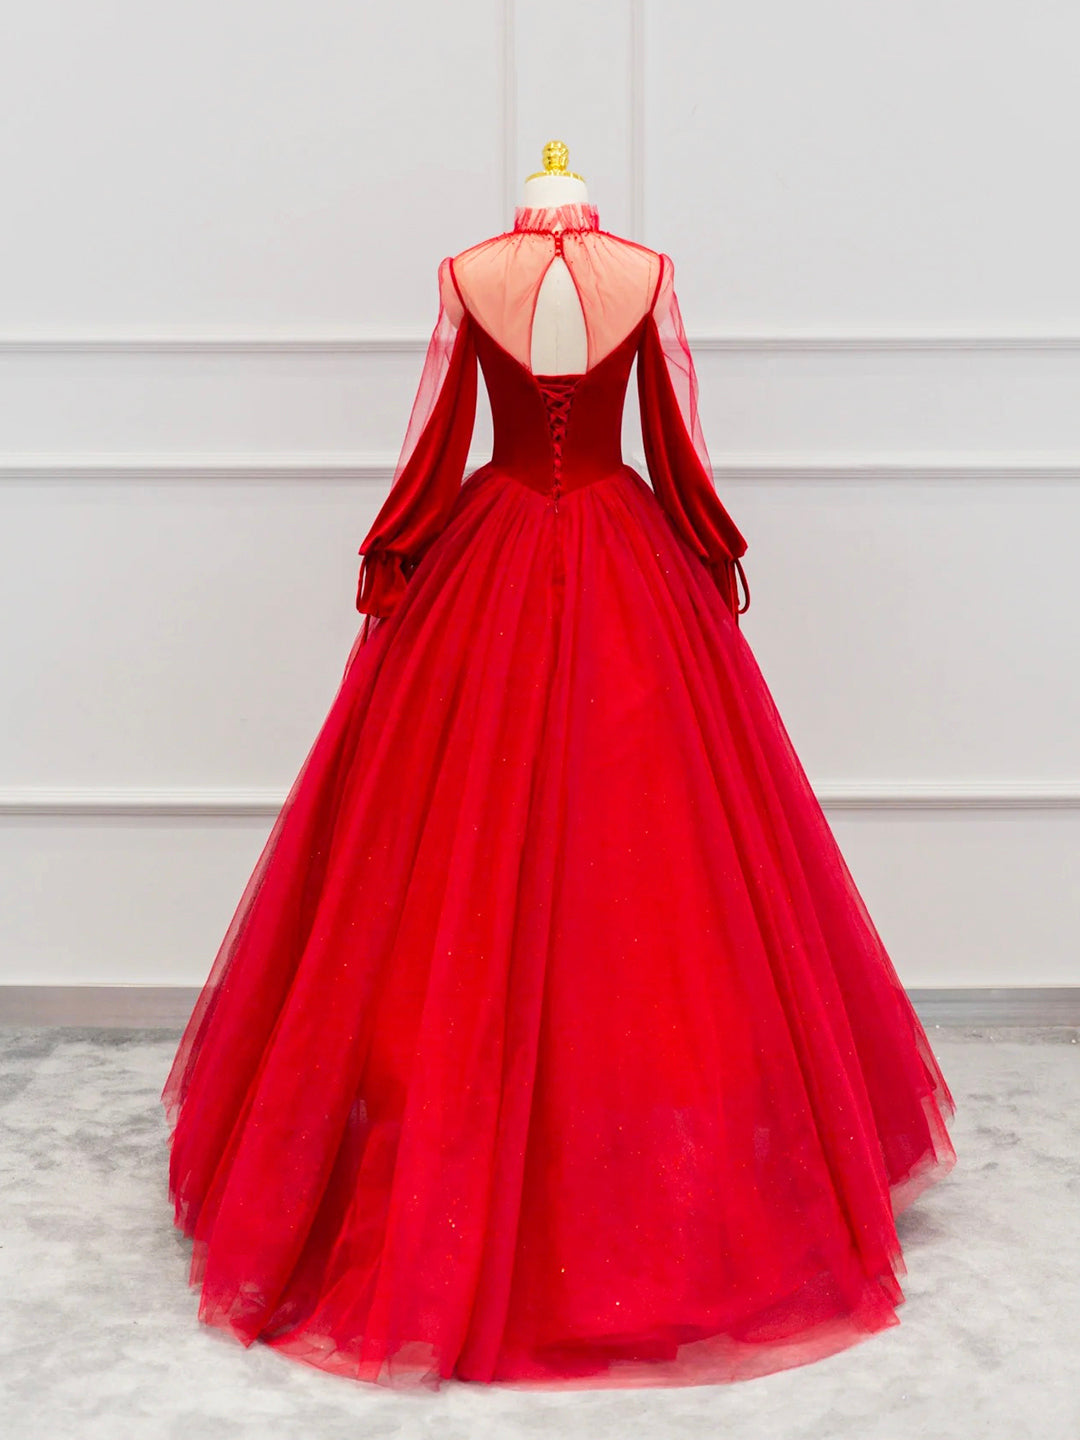 Gorgeou Dress, Red Velvet Tulle Floor Length Prom Dress, Beautiful Long Sleeve Evening Party Dress